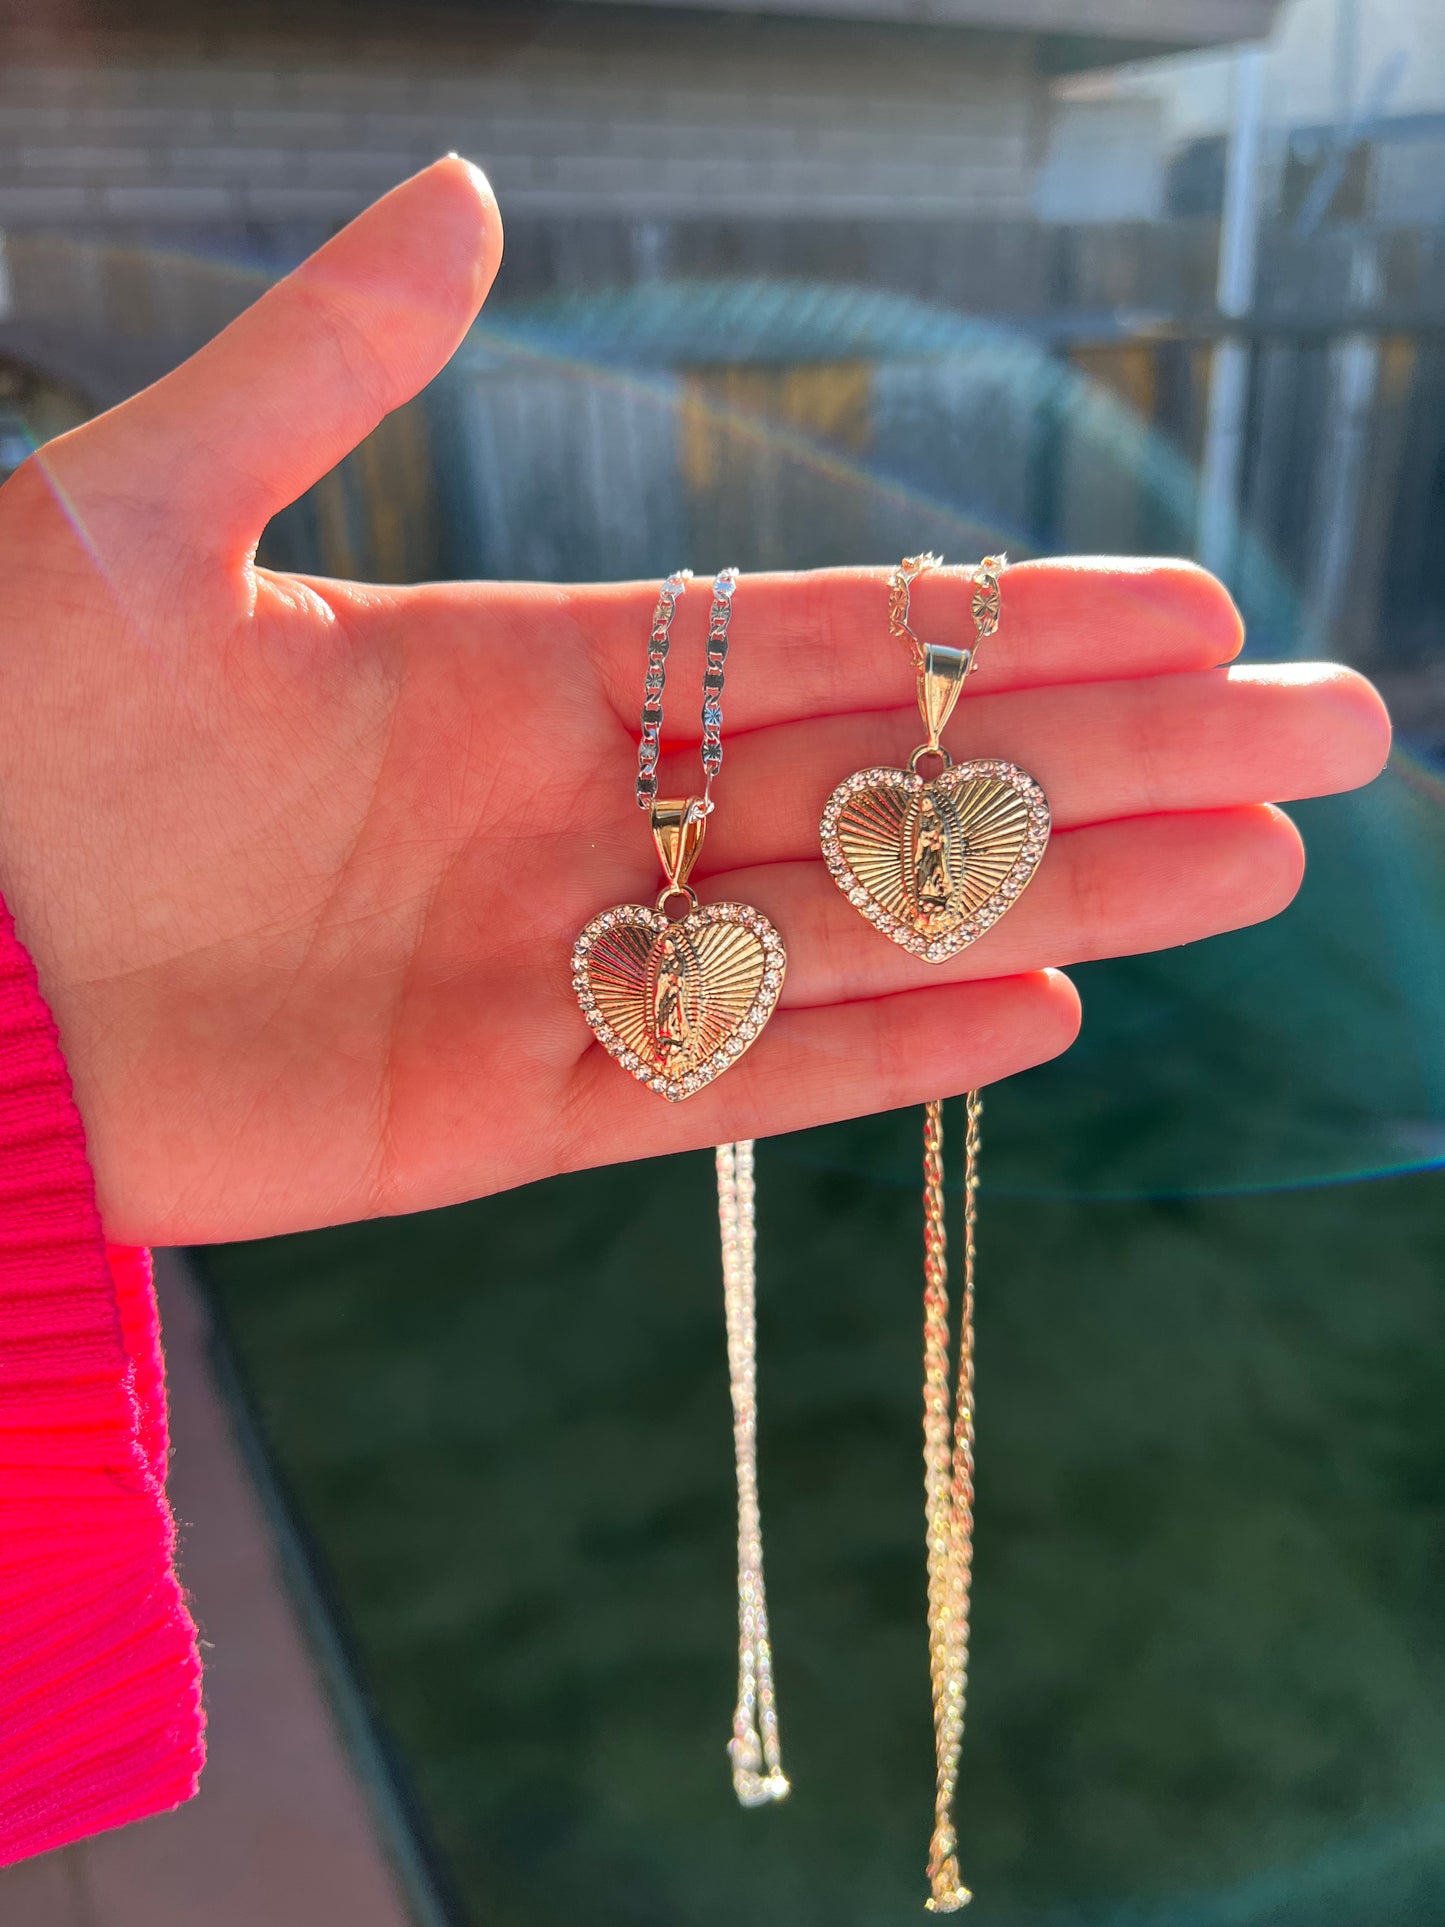 Virgen Mary heart diamond necklace silver chain